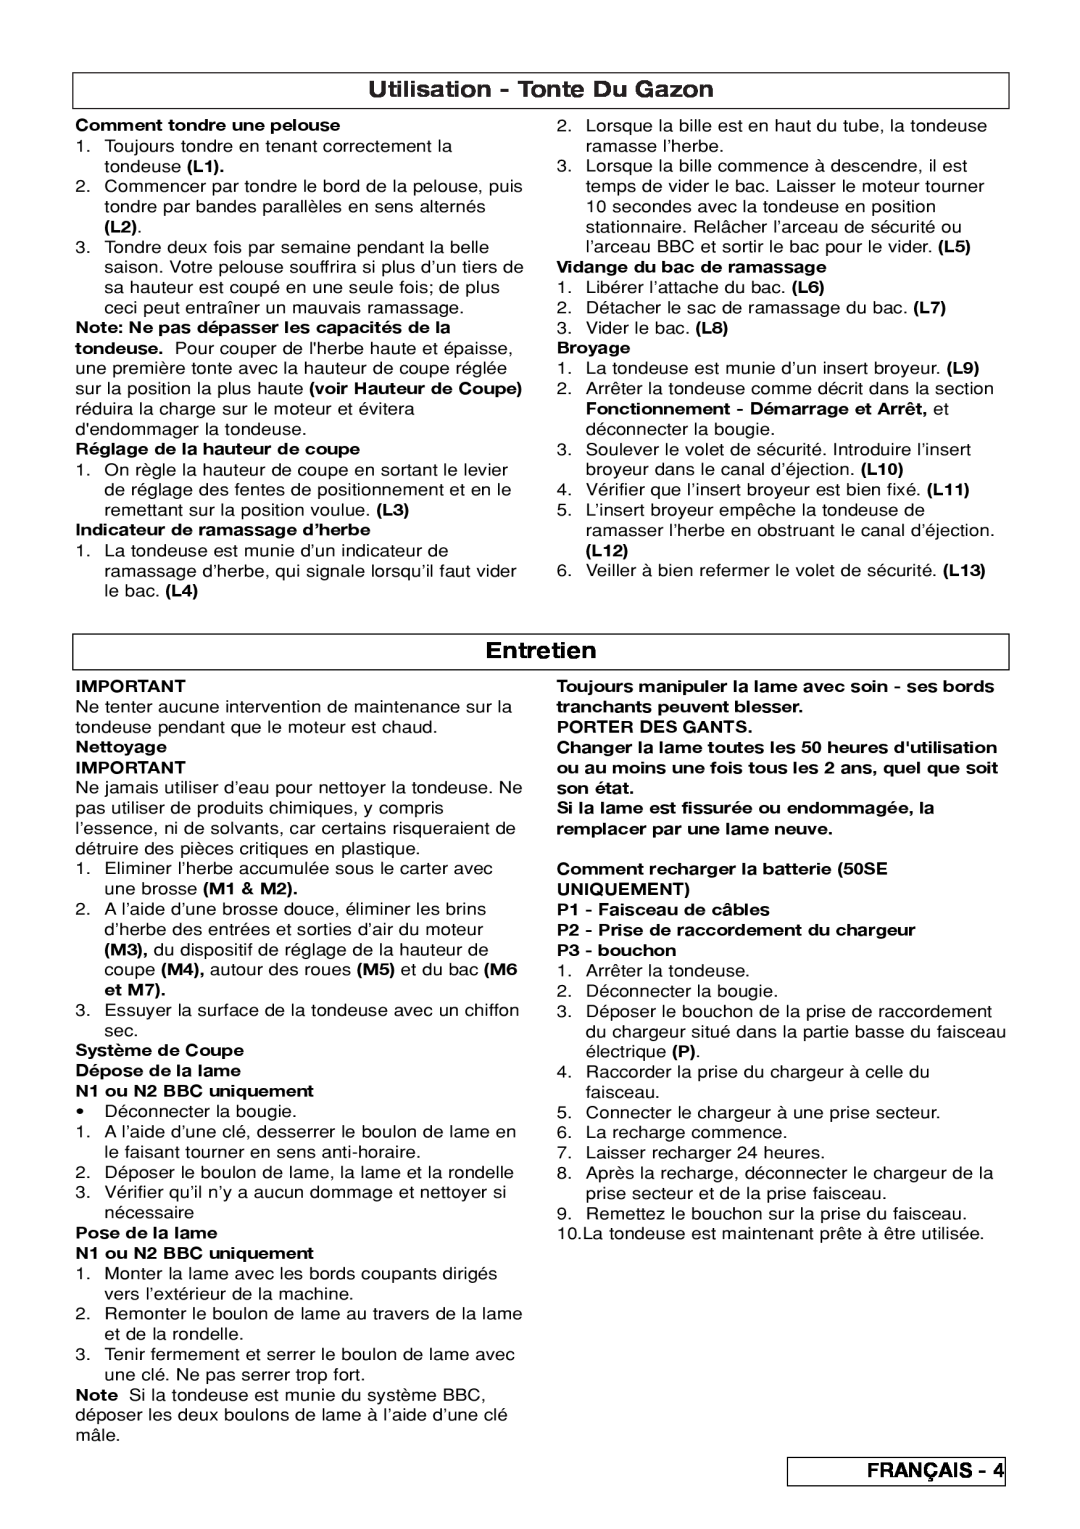 Husqvarna R 50SE, R 50S / BBC manual Utilisation - Tonte Du Gazon, Entretien 